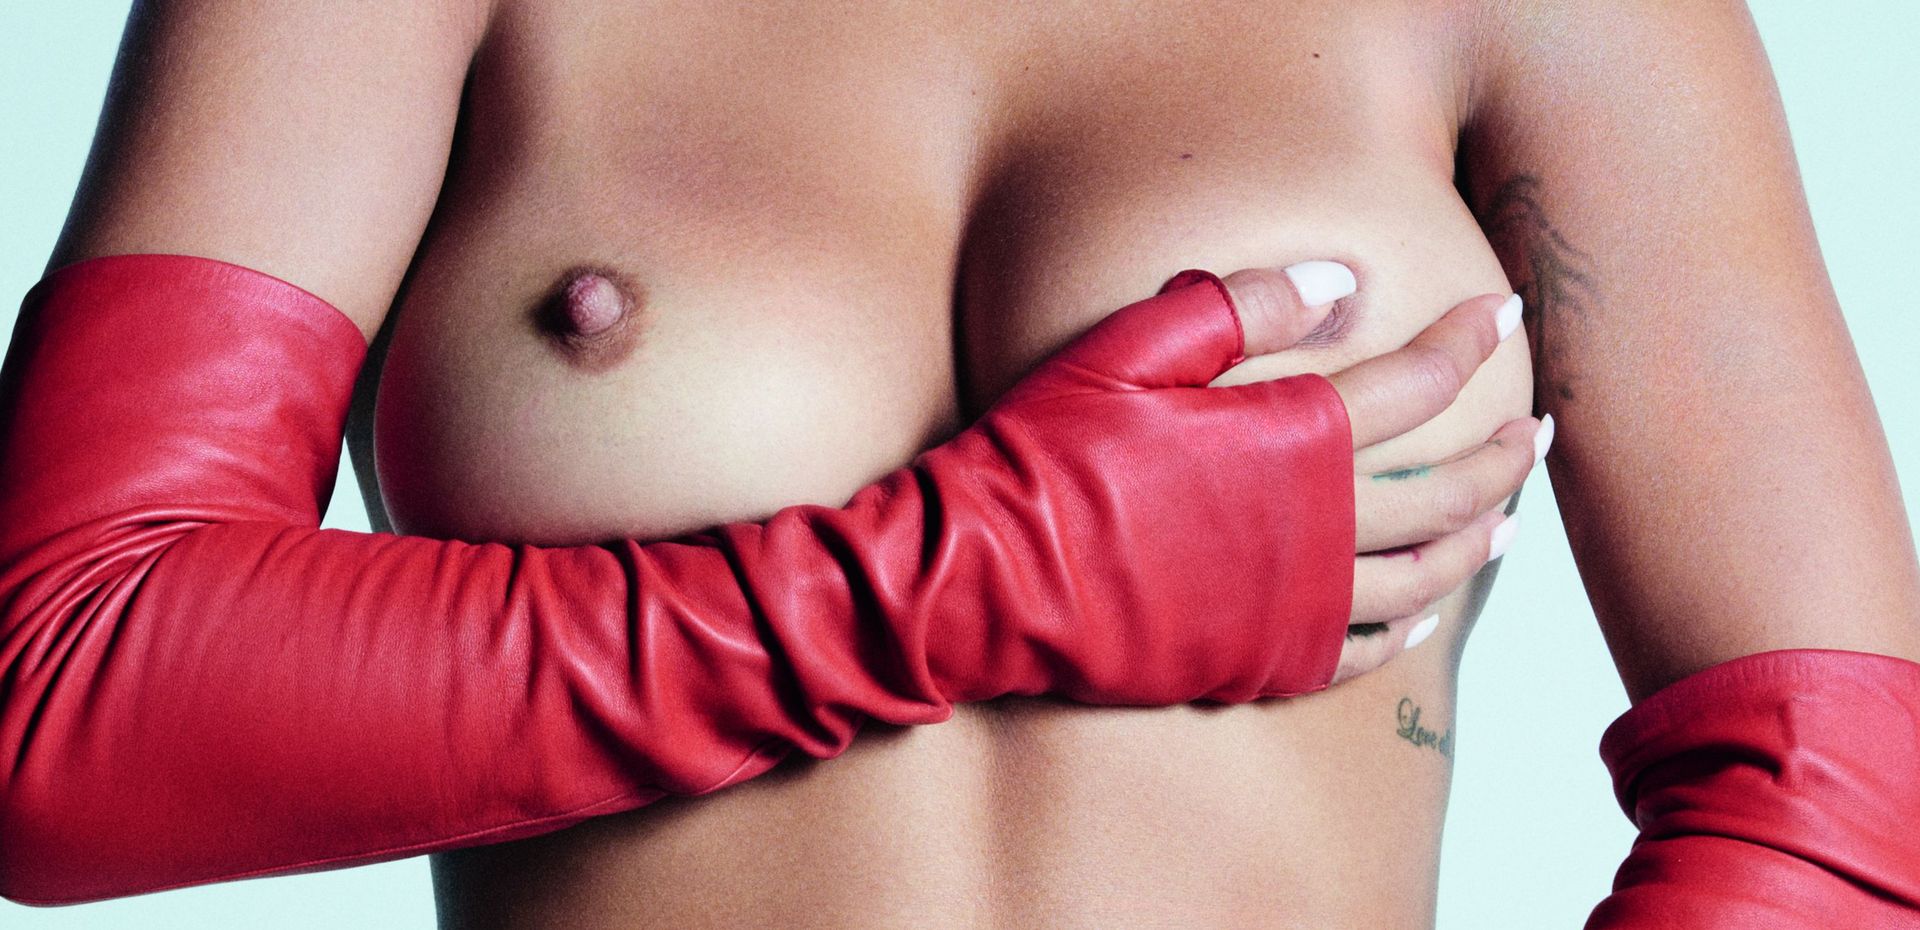 Rita Ora Shows Her Nude Tits for Clash (2 Photos) #TheFappen